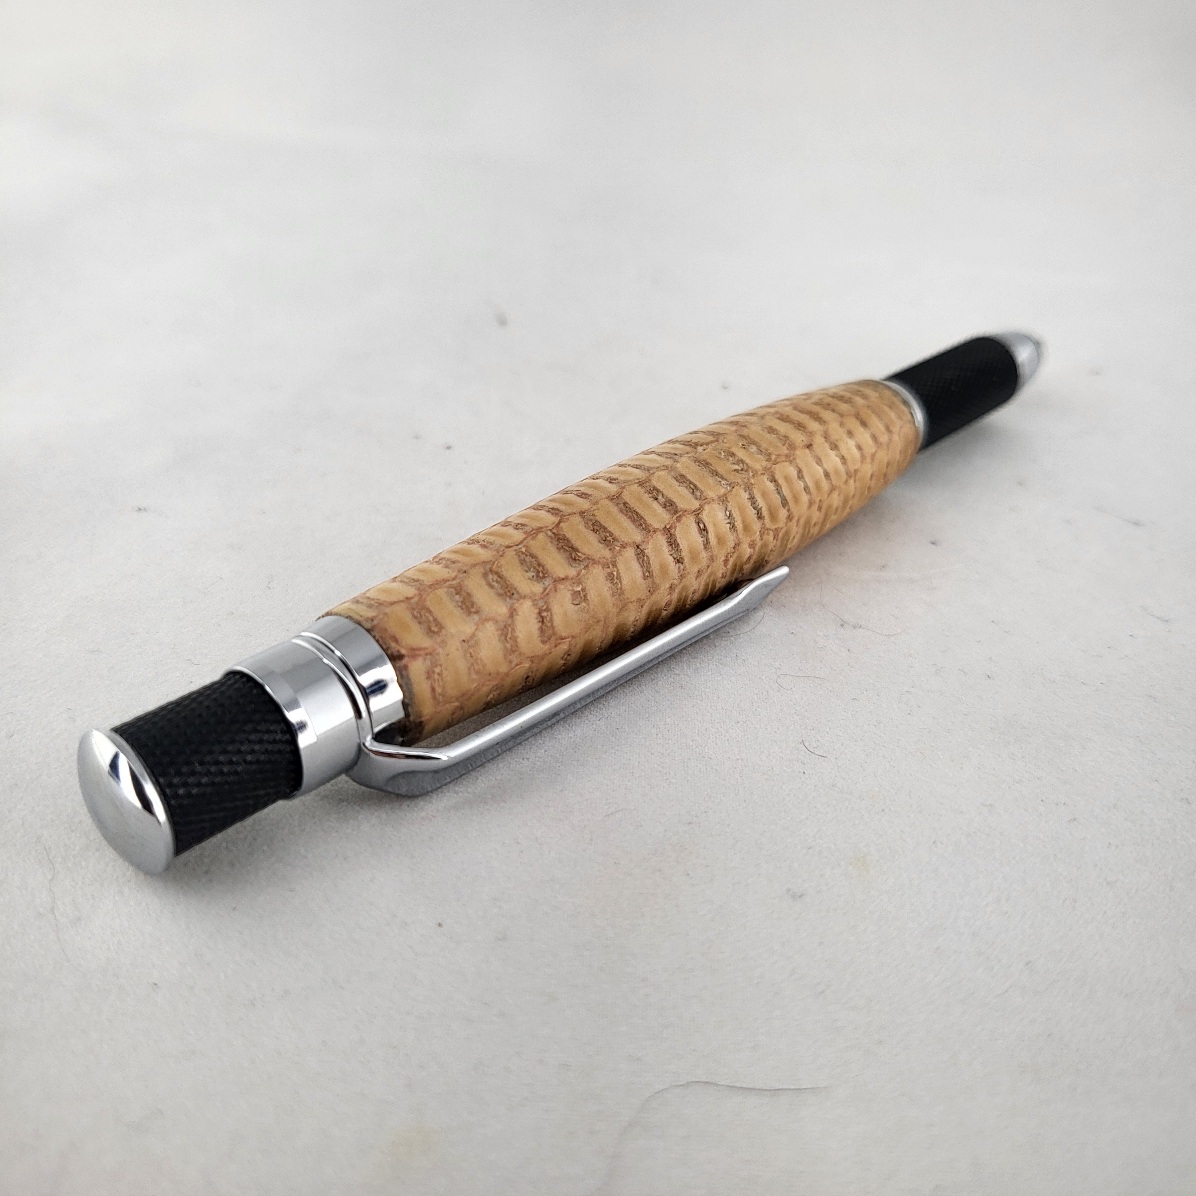 Knurl pen with corncob and stylus